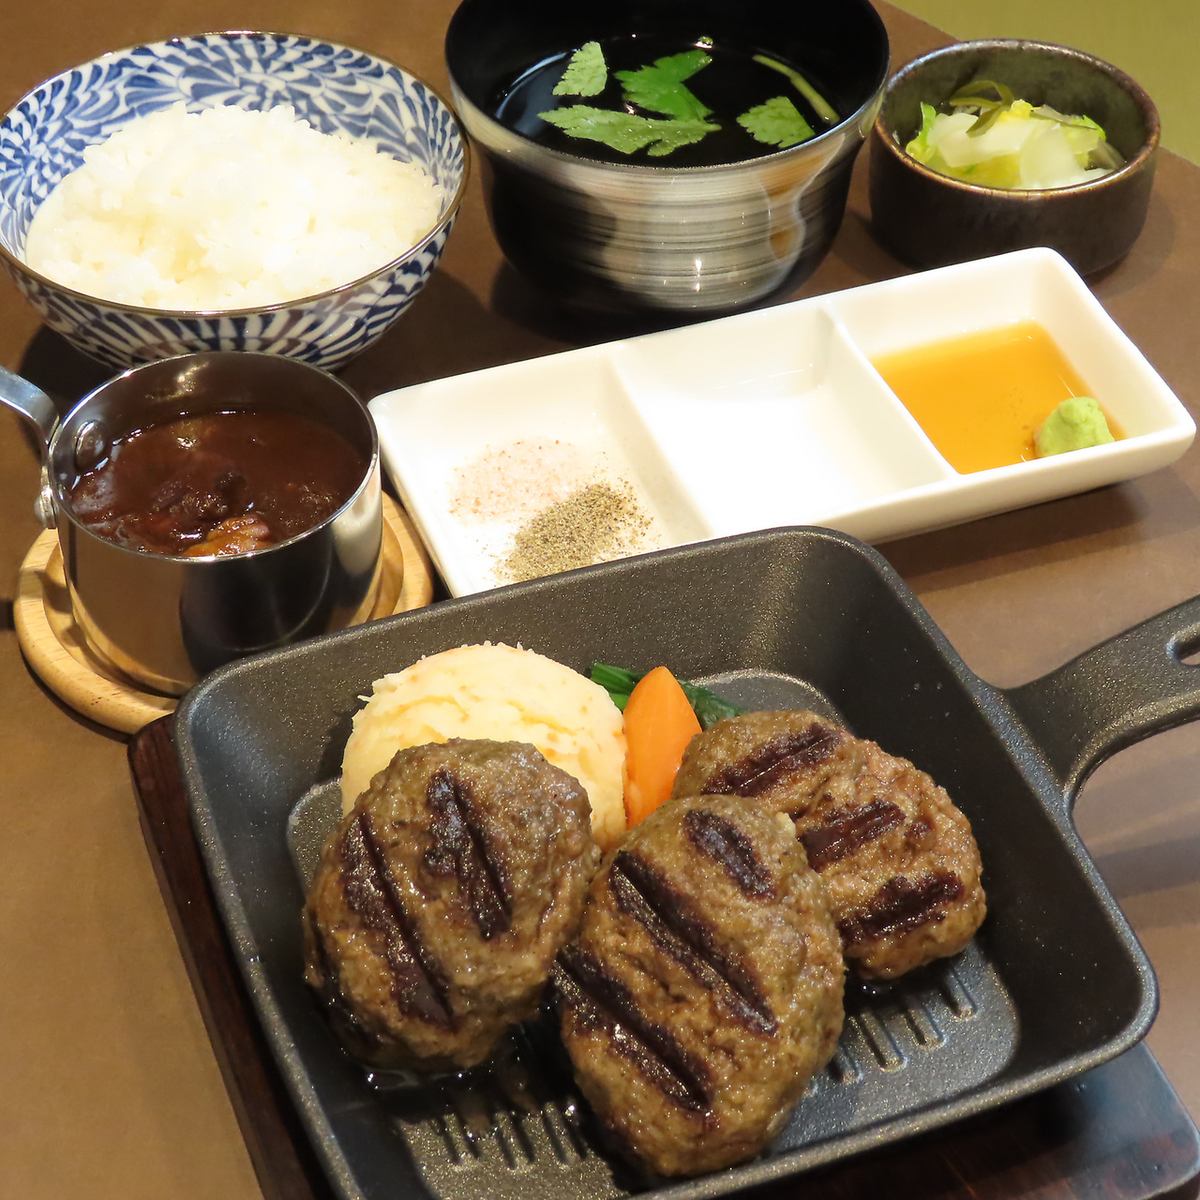 30 seconds from Kanda Station ◆ Miyazaki beef hamburger ◆ Rich sauce goes great with rice